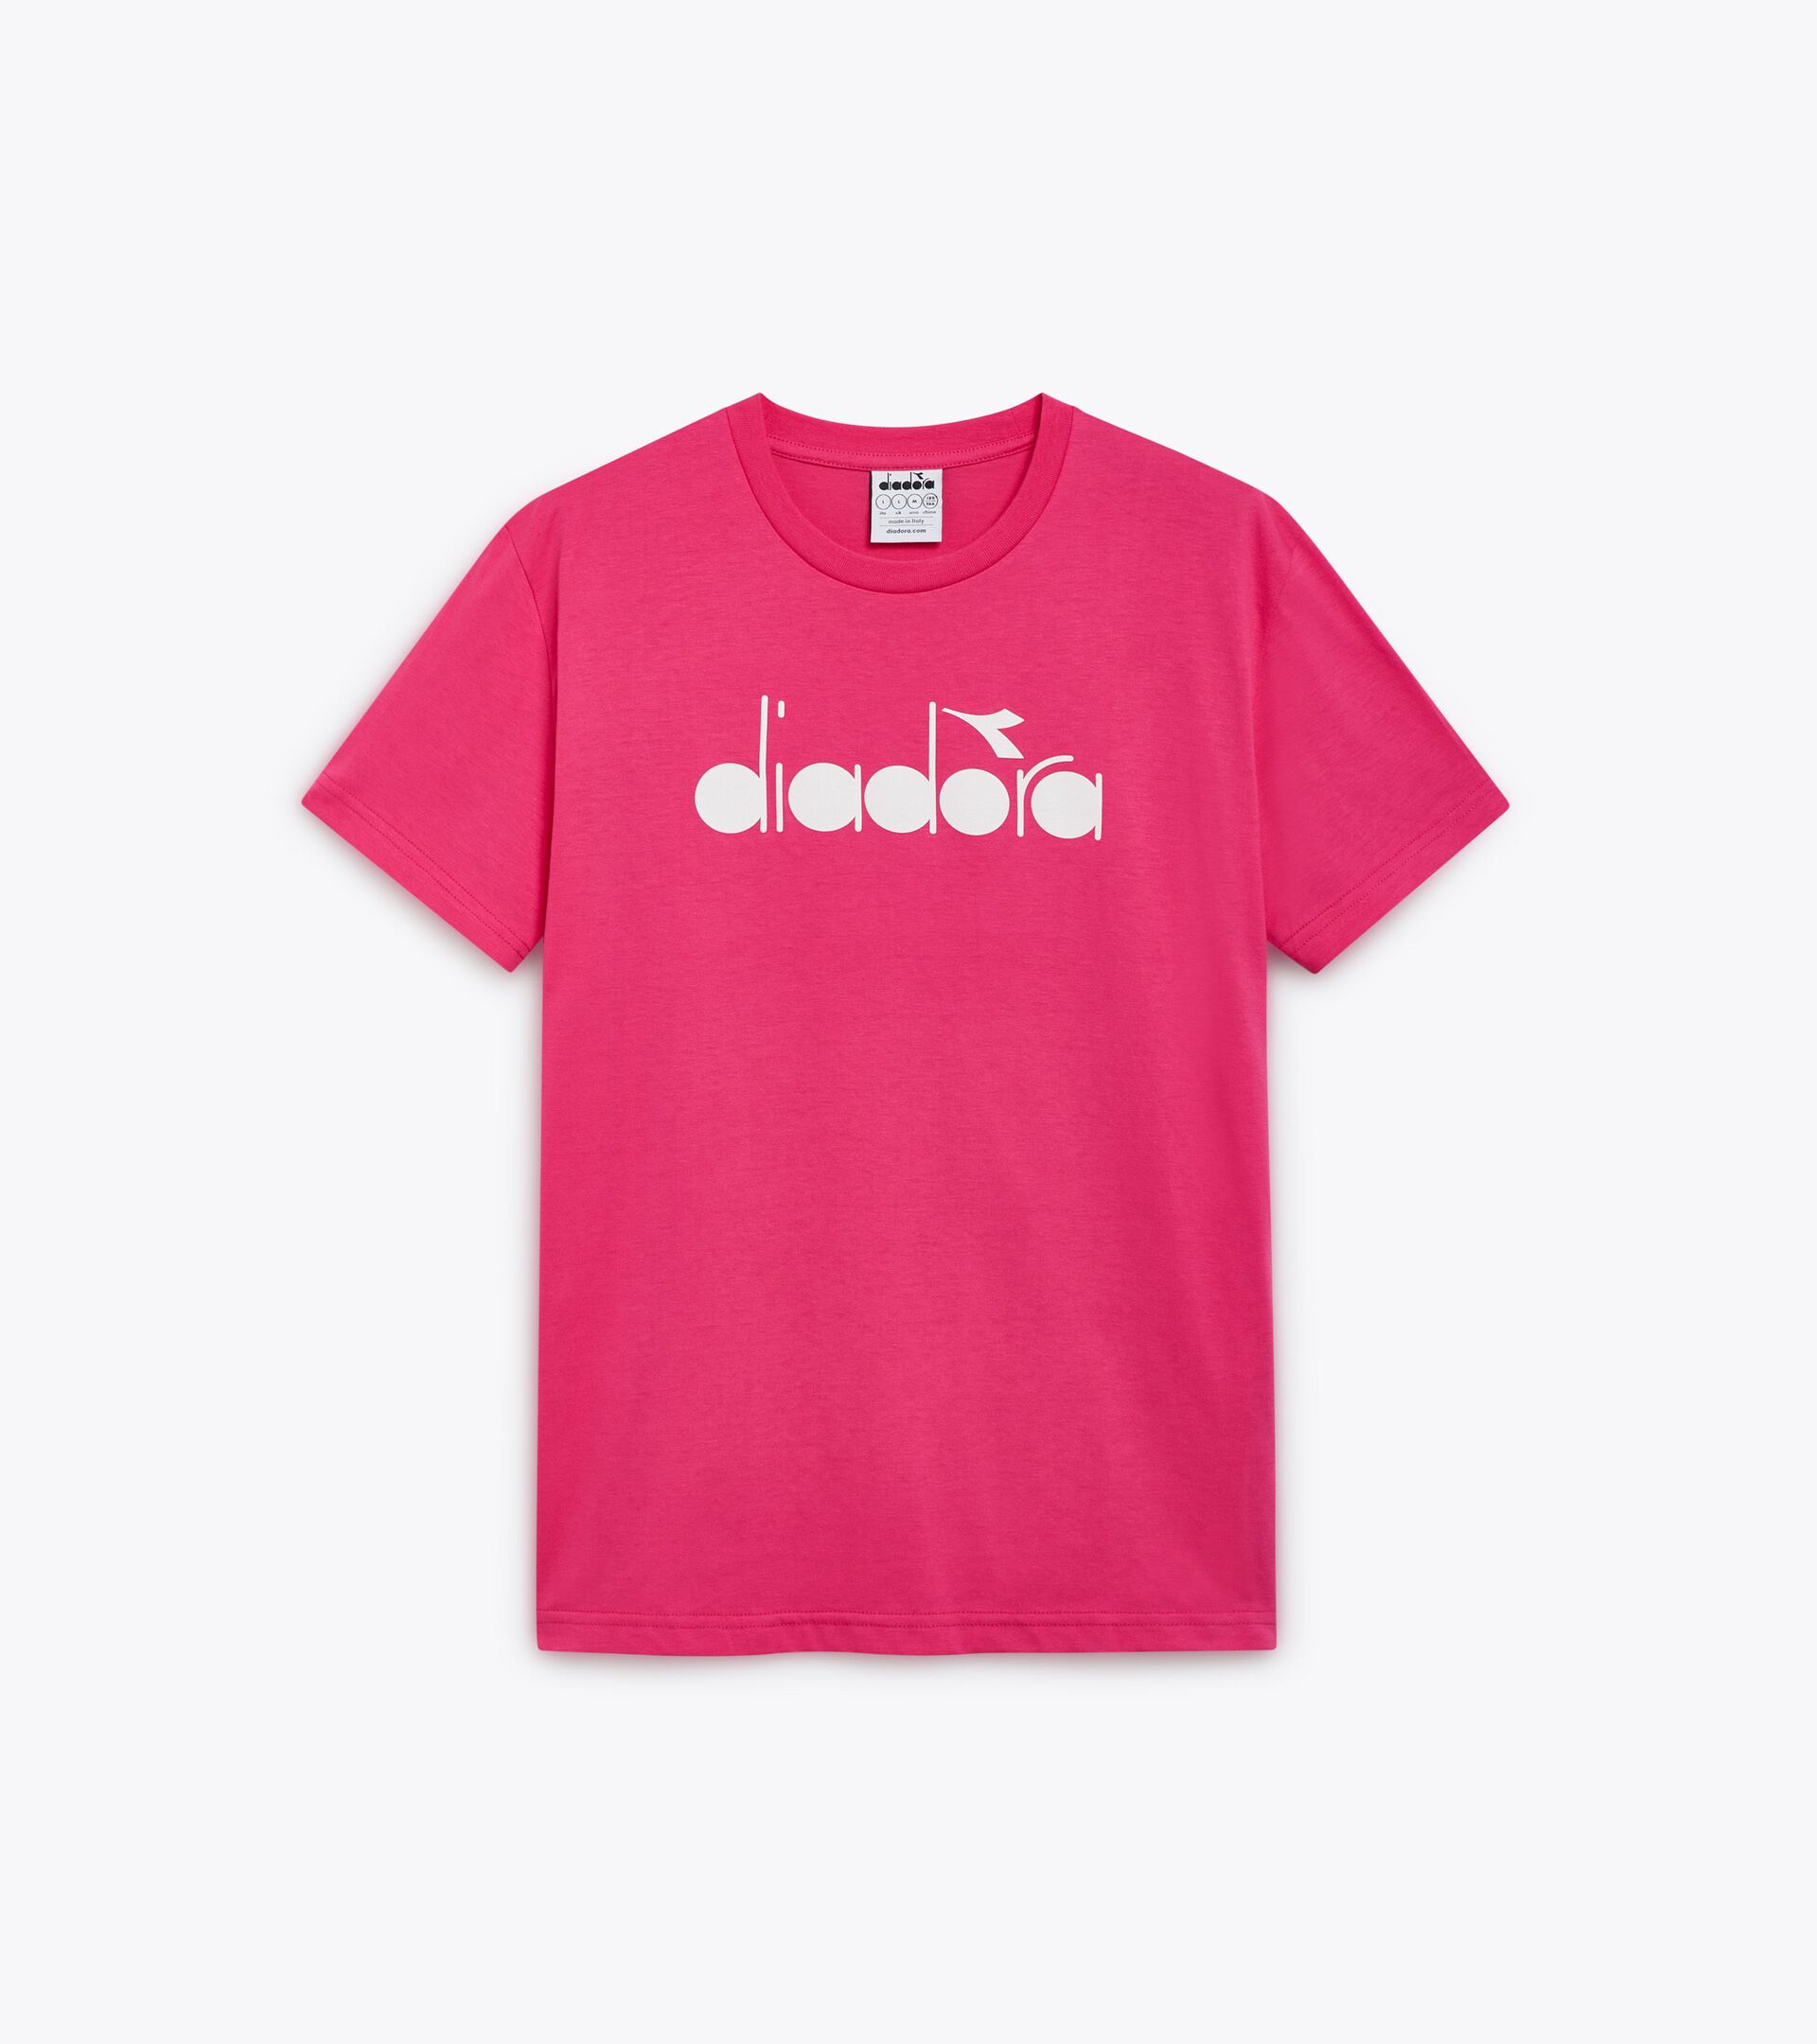 T-shirt - Made in Italy - Gender Neutral T-SHIRT SS LOGO PINK SORBET - Diadora